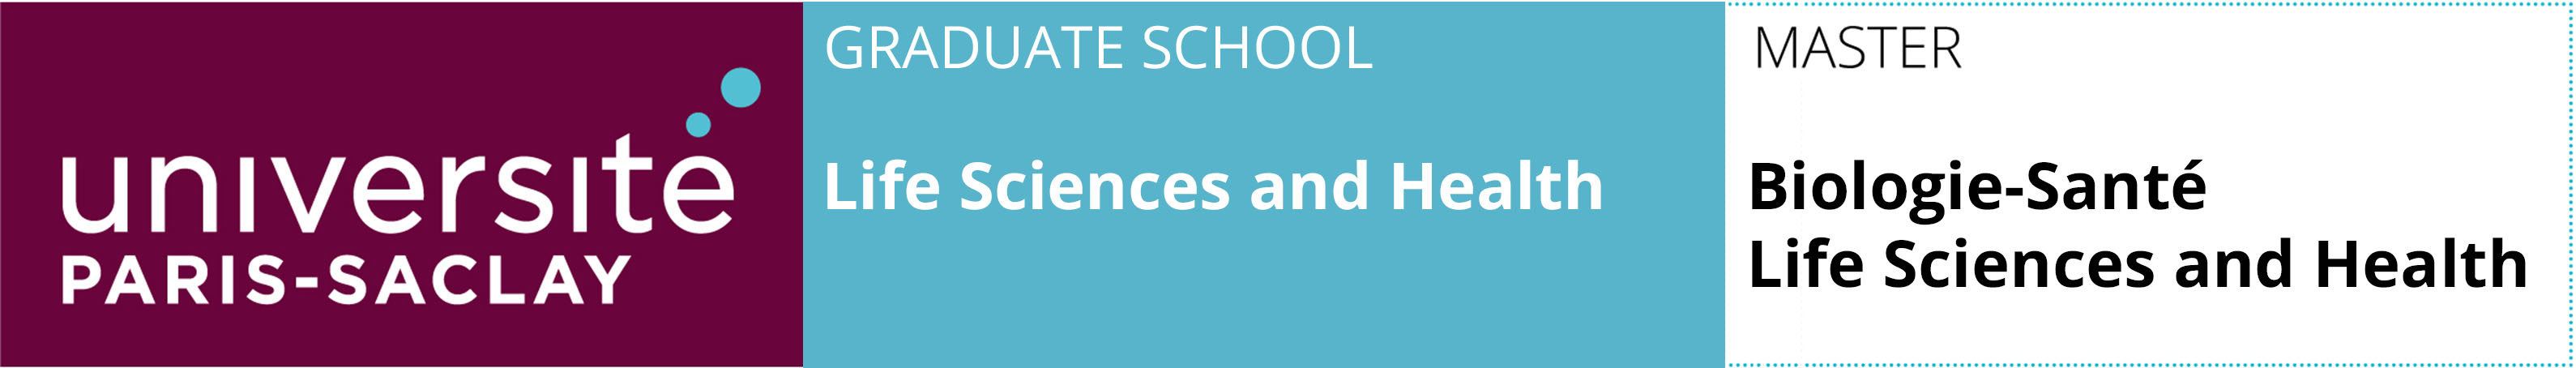 Life Sciences & Health GenE2 banner